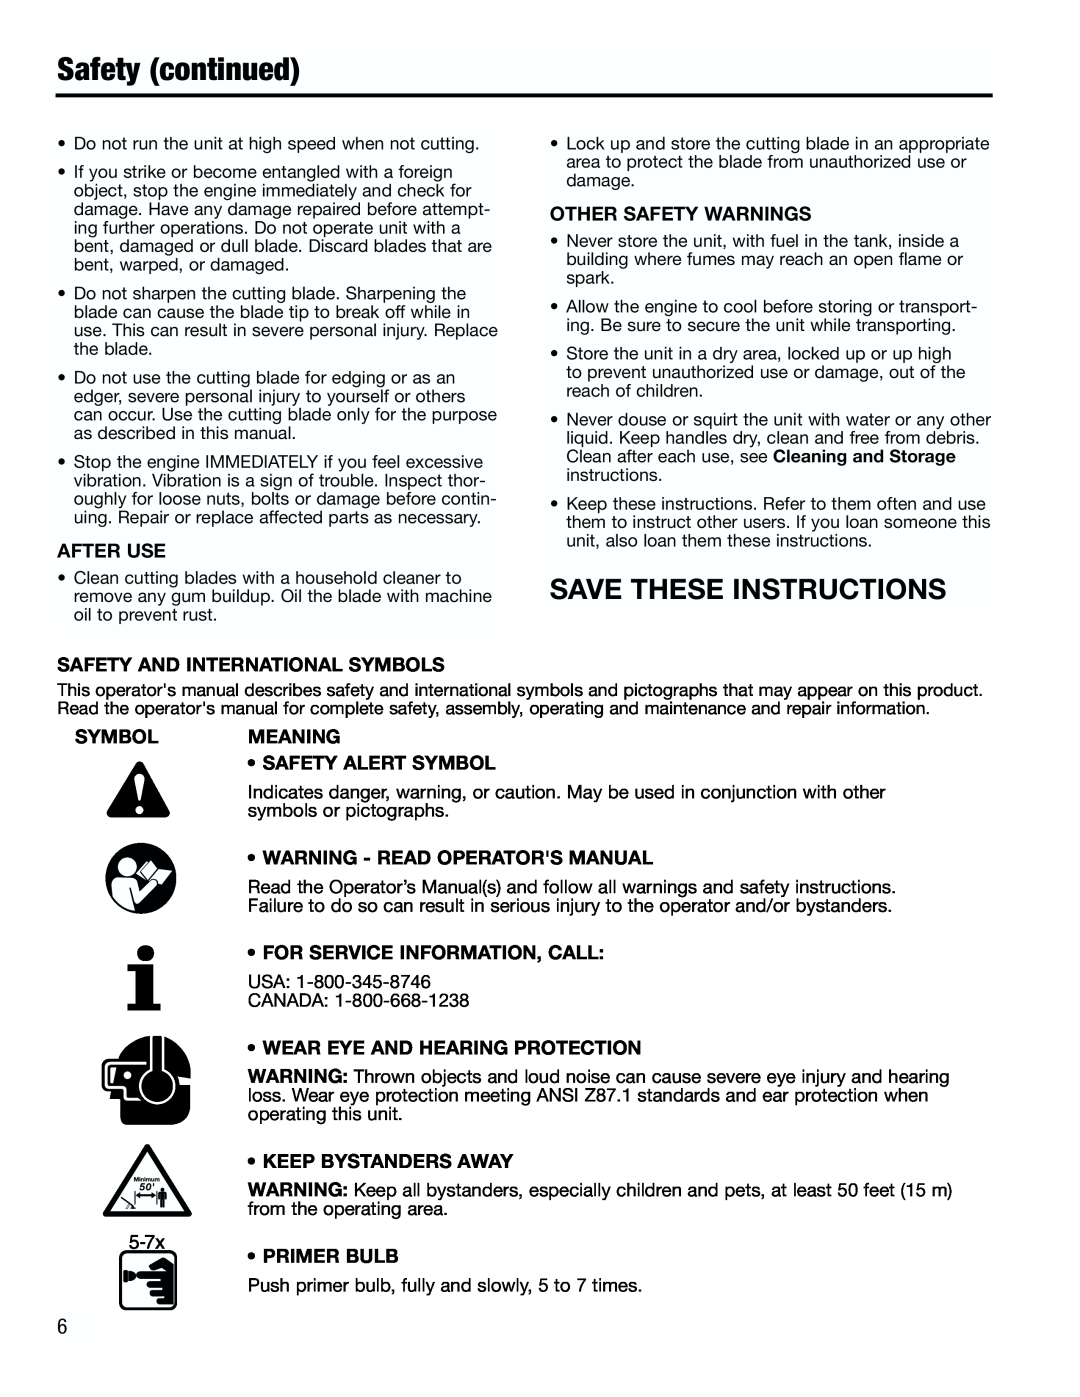 Troy-Bilt TB4000 After Use, Safety And International Symbols, Other Safety Warnings, Symbol Meaning Safety Alert Symbol 